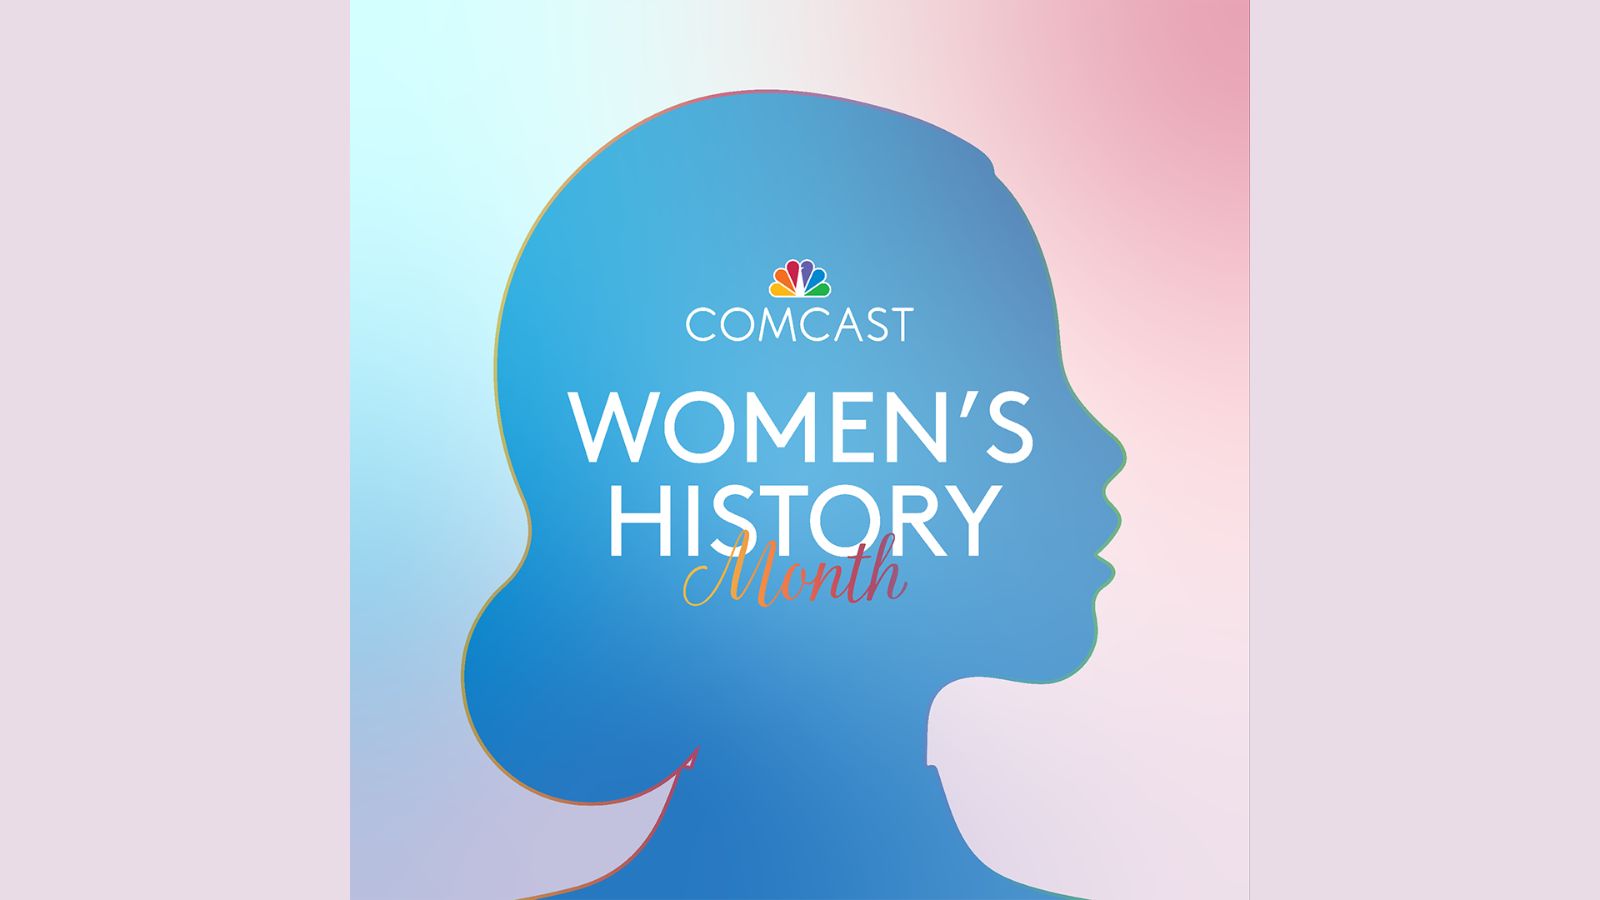 Comcast Celebrates Women’s History Month 